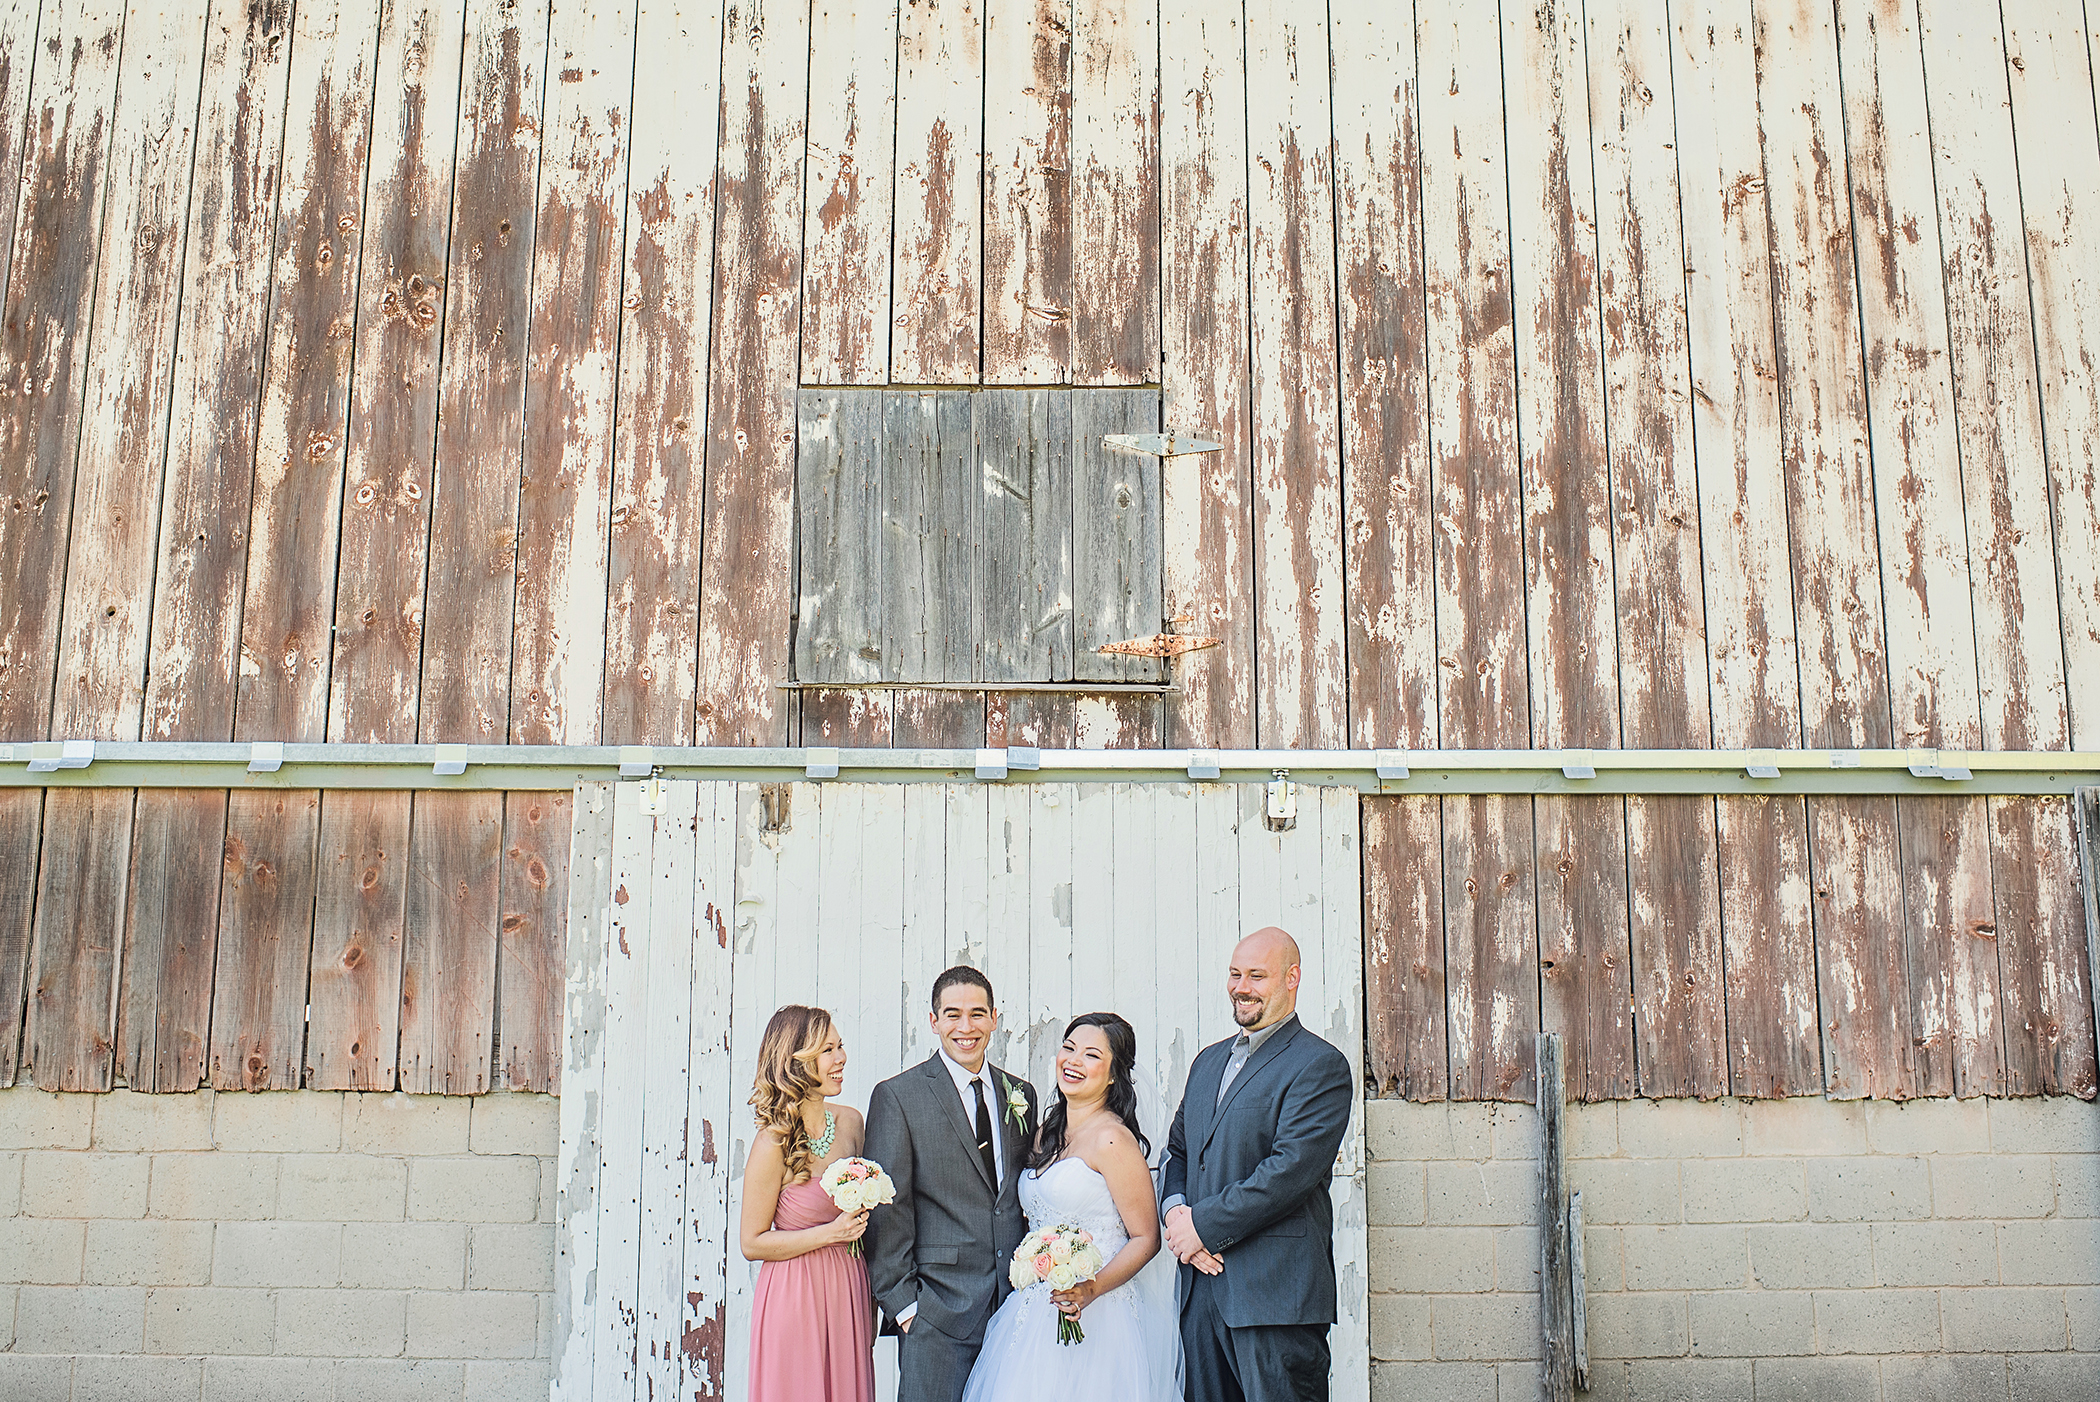 The Barn at Harvest Moon Pond - Poynette, WI Wedding Photographer